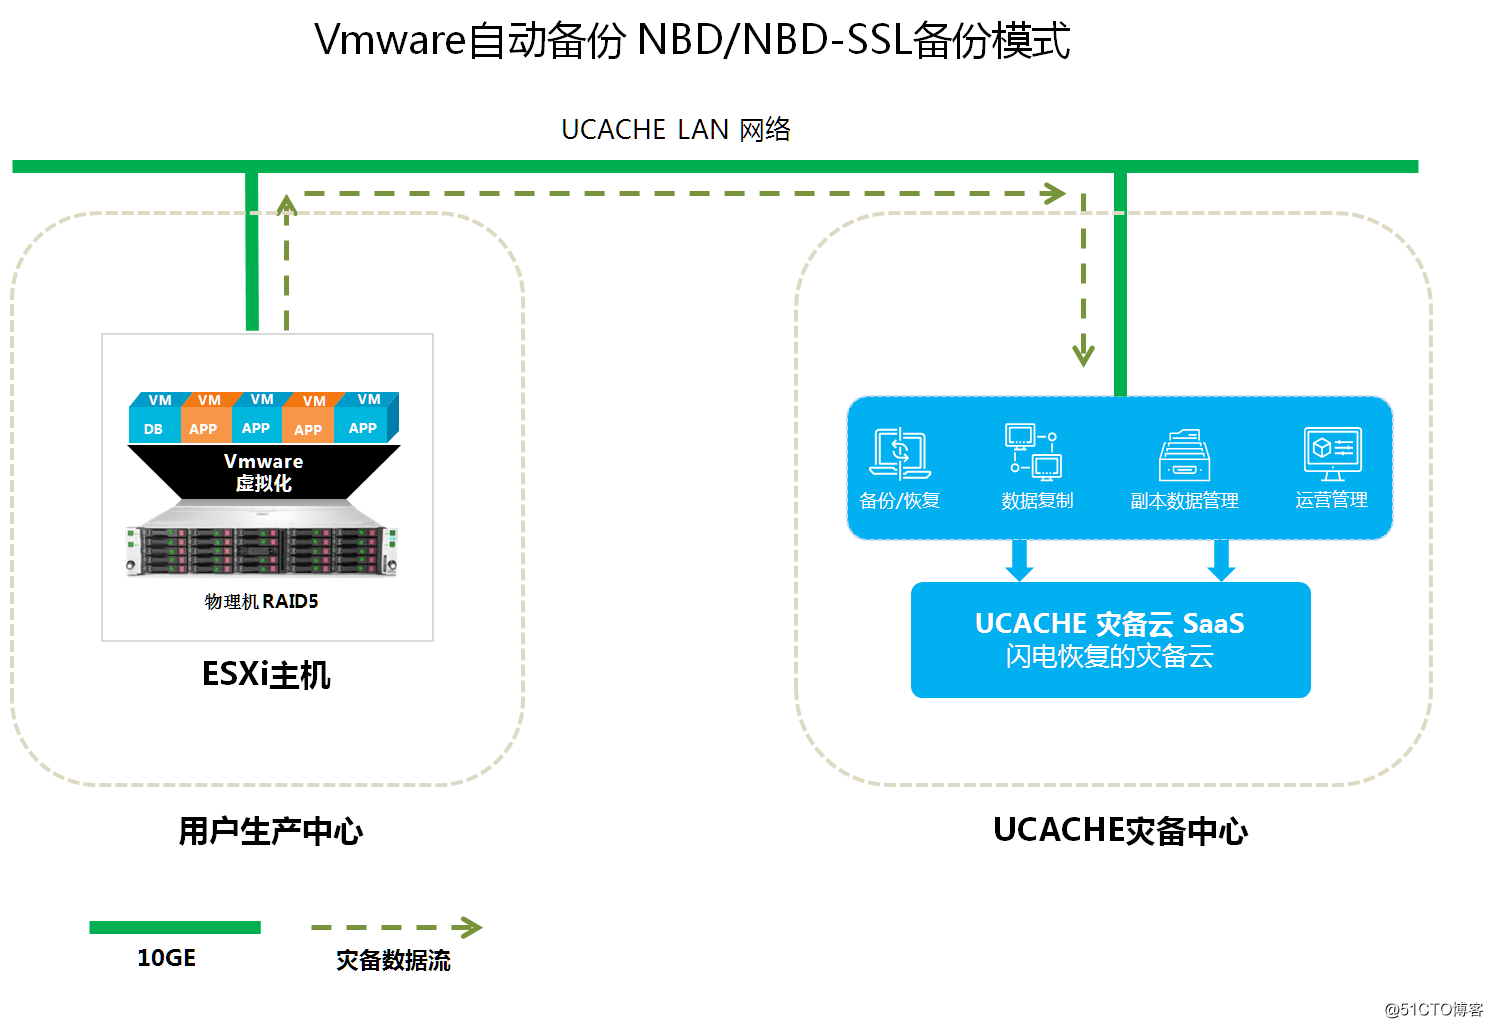 VMware virtualization platform backup and recovery